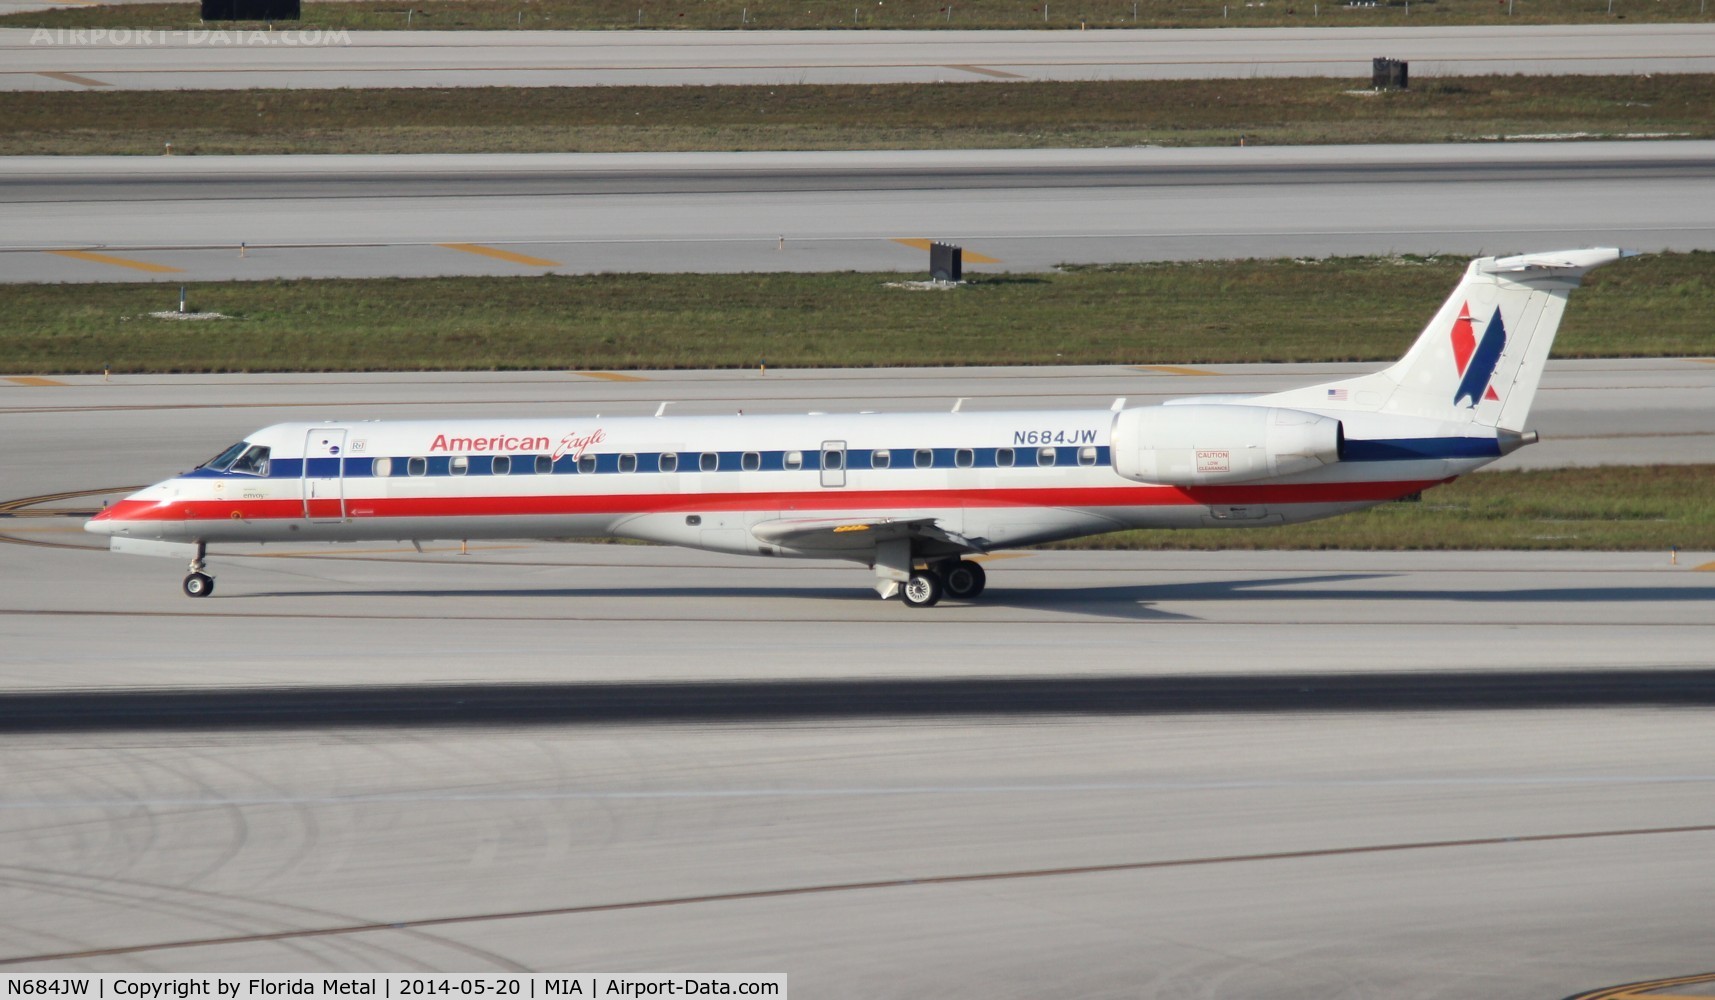 N684JW, 2004 Embraer ERJ-145LR (EMB-145LR) C/N 14500835, American Eagle